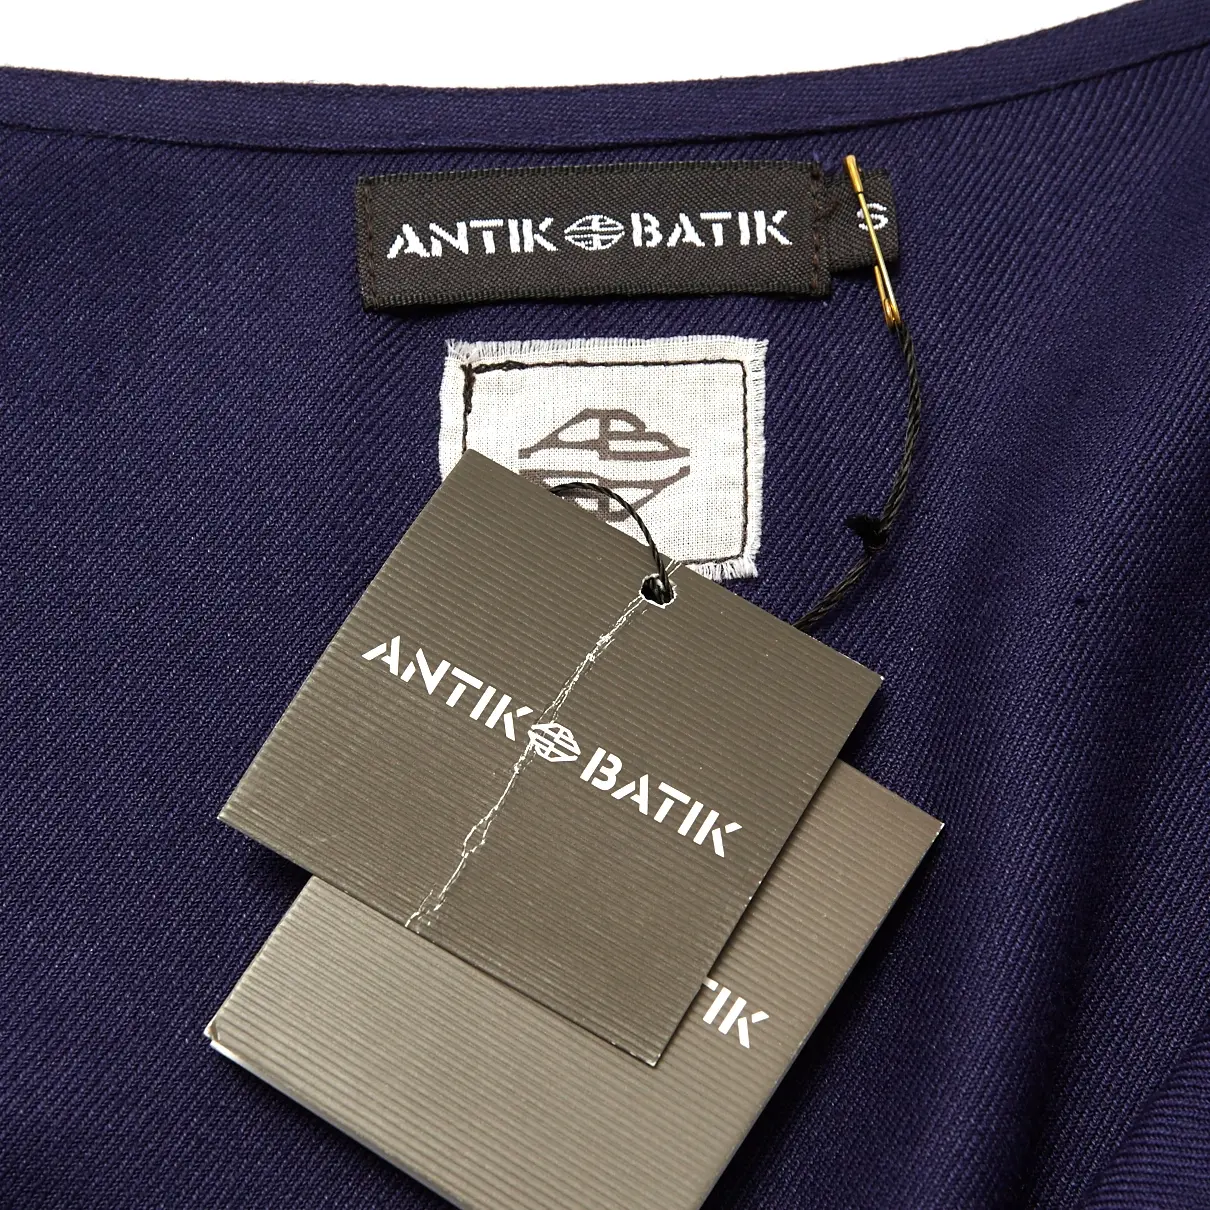 Buy Antik Batik Blouse online